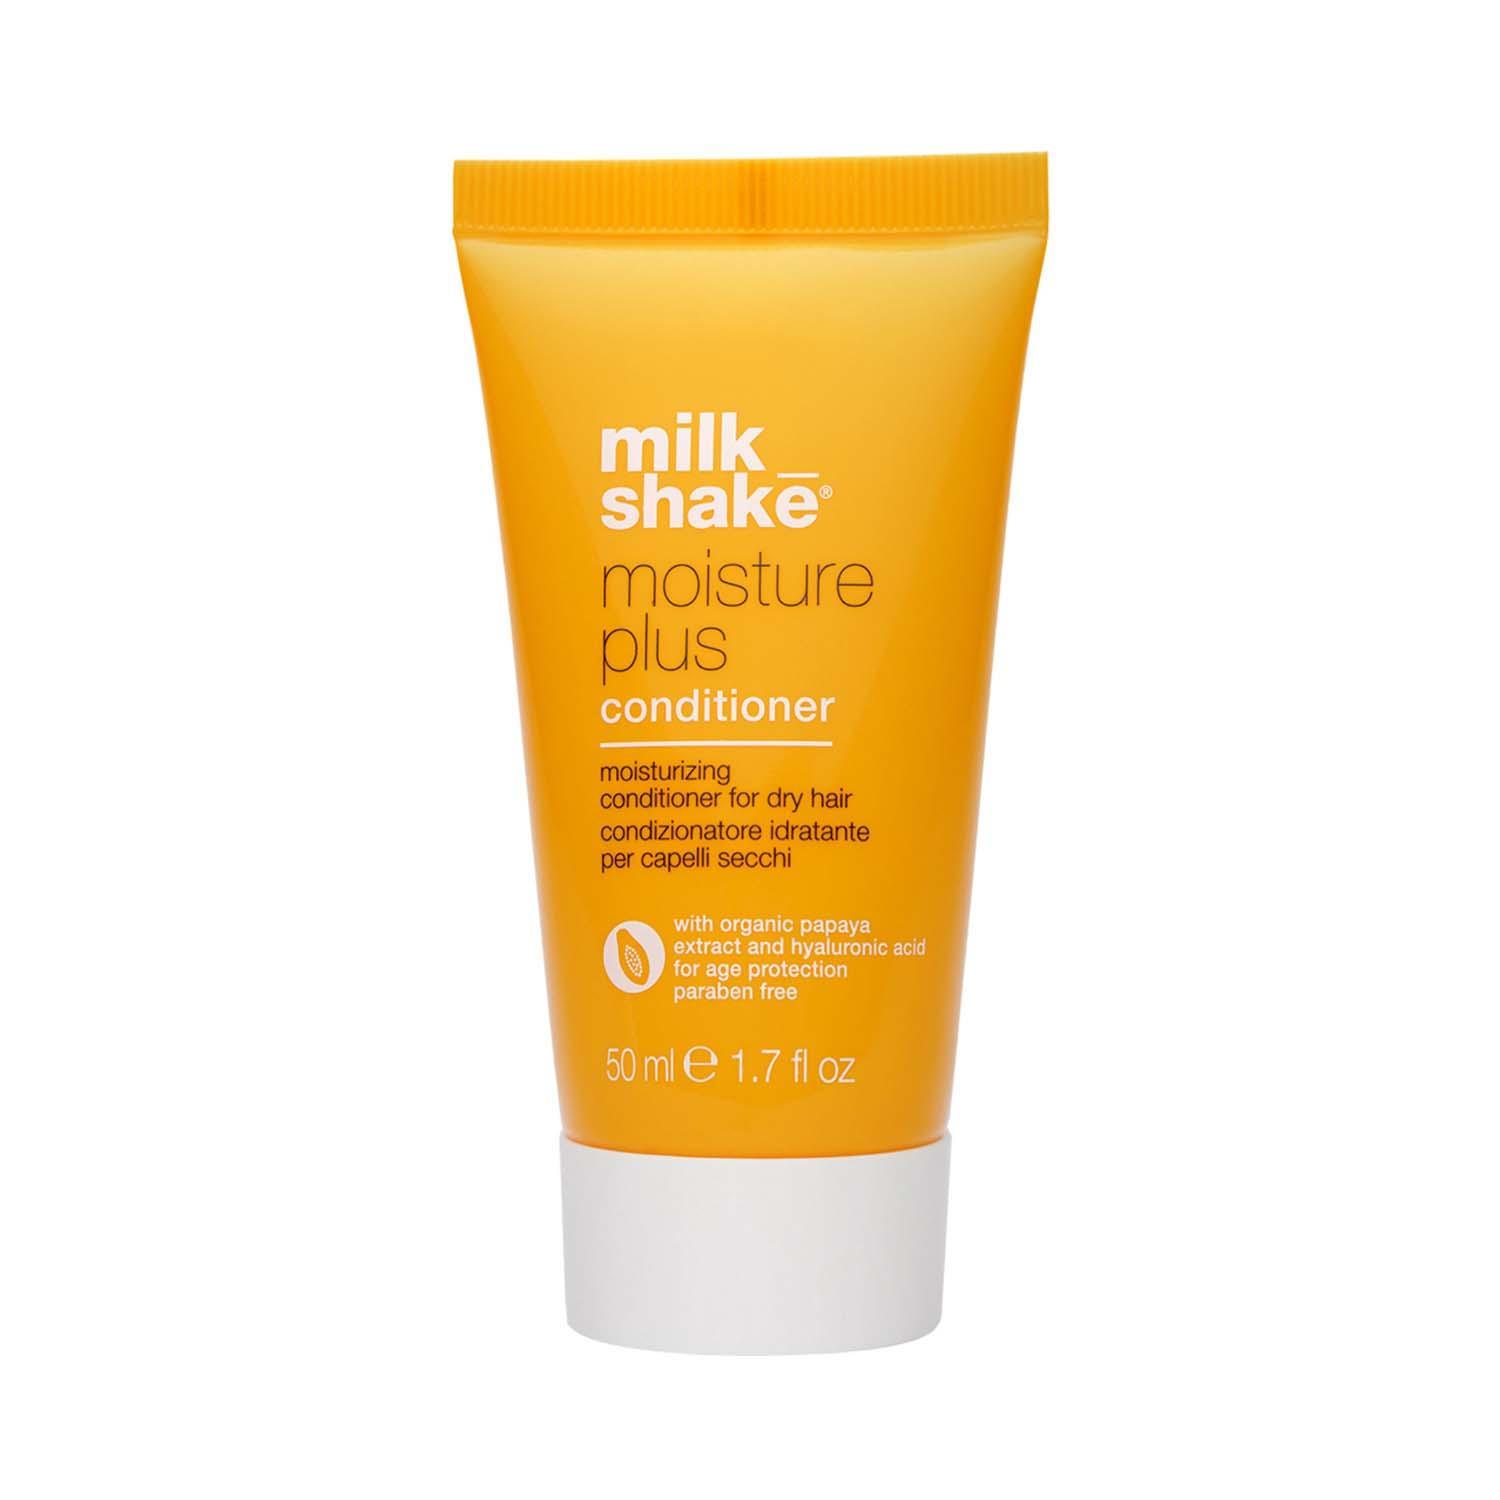 milk-shake-moisture-plus-conditioner-(50ml)